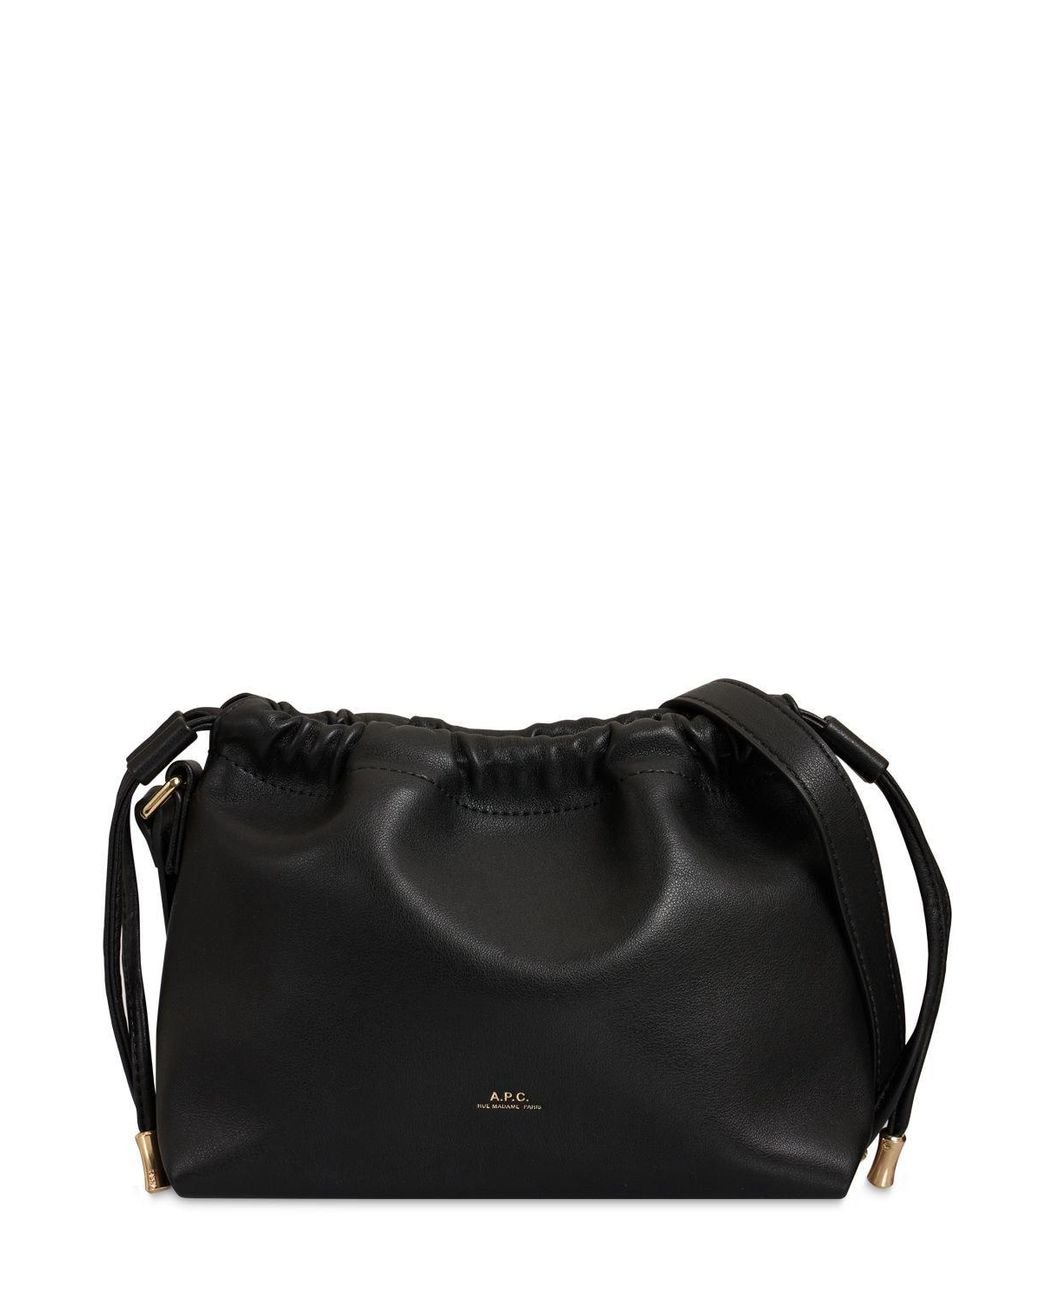 A.P.C. Sac Ninon Mini Shoulder Bag in Black | Lyst